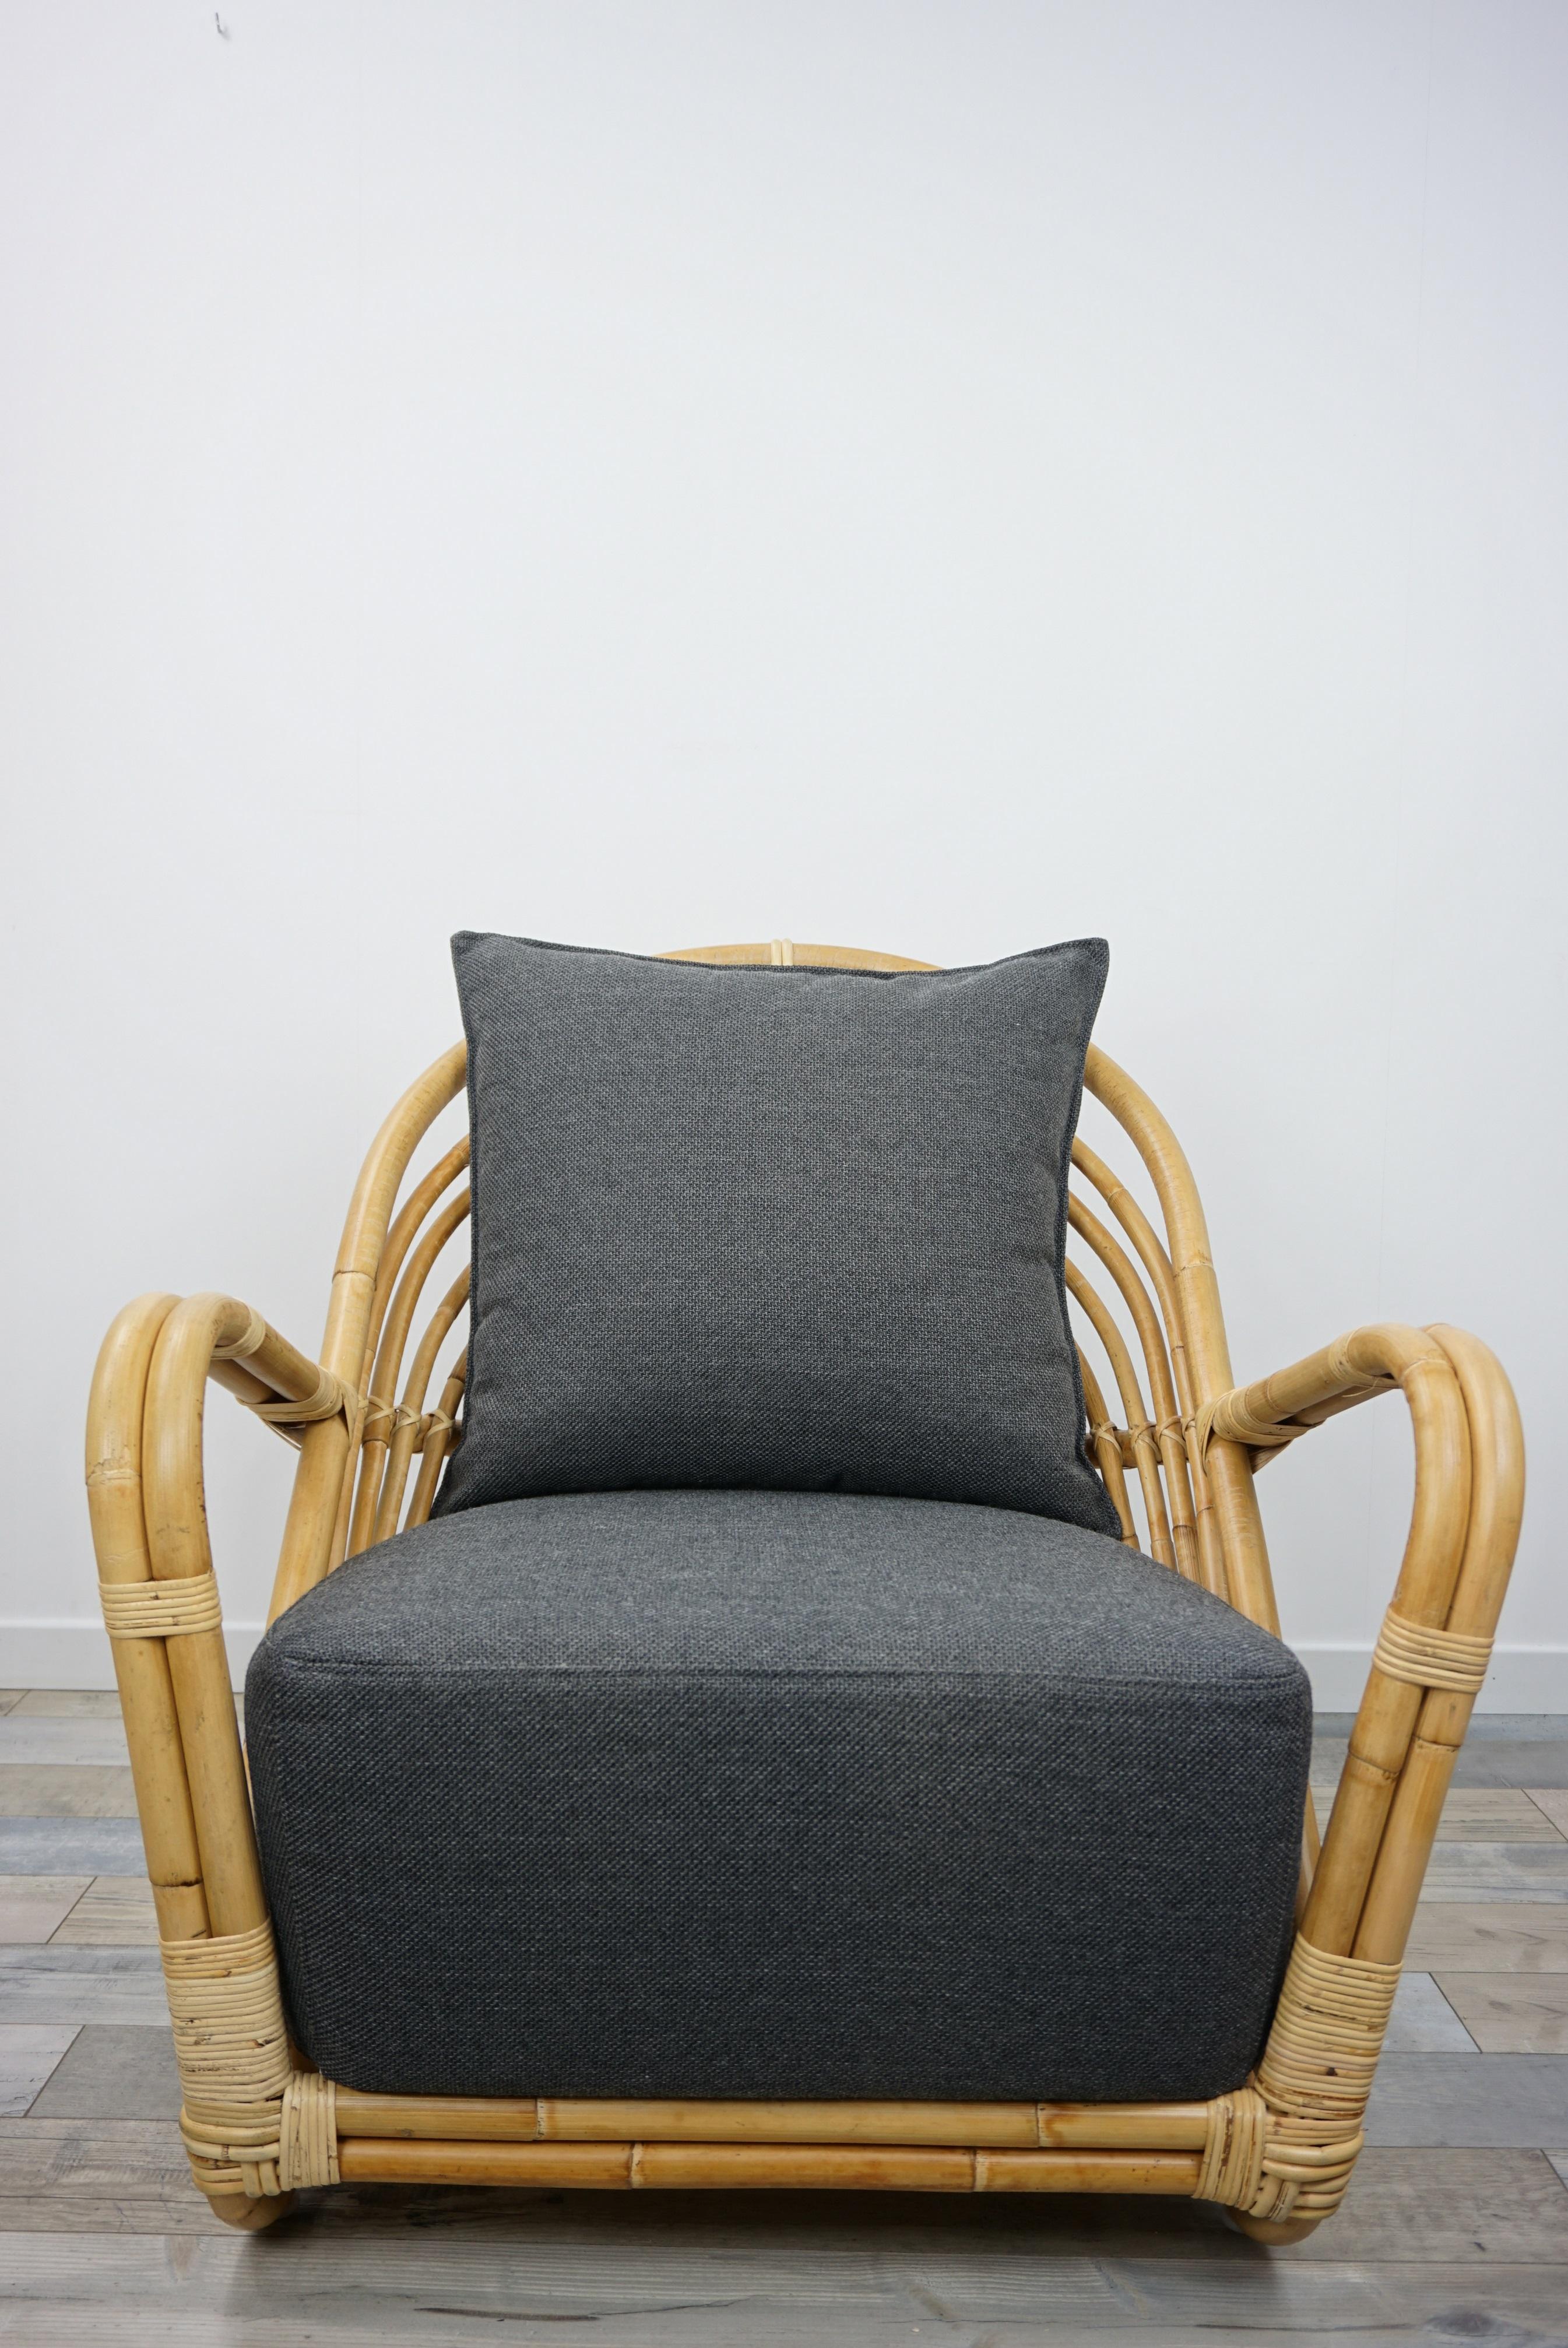 1930s Arne Jacobsen Design Rattan Lounge Armchair For Sale 2